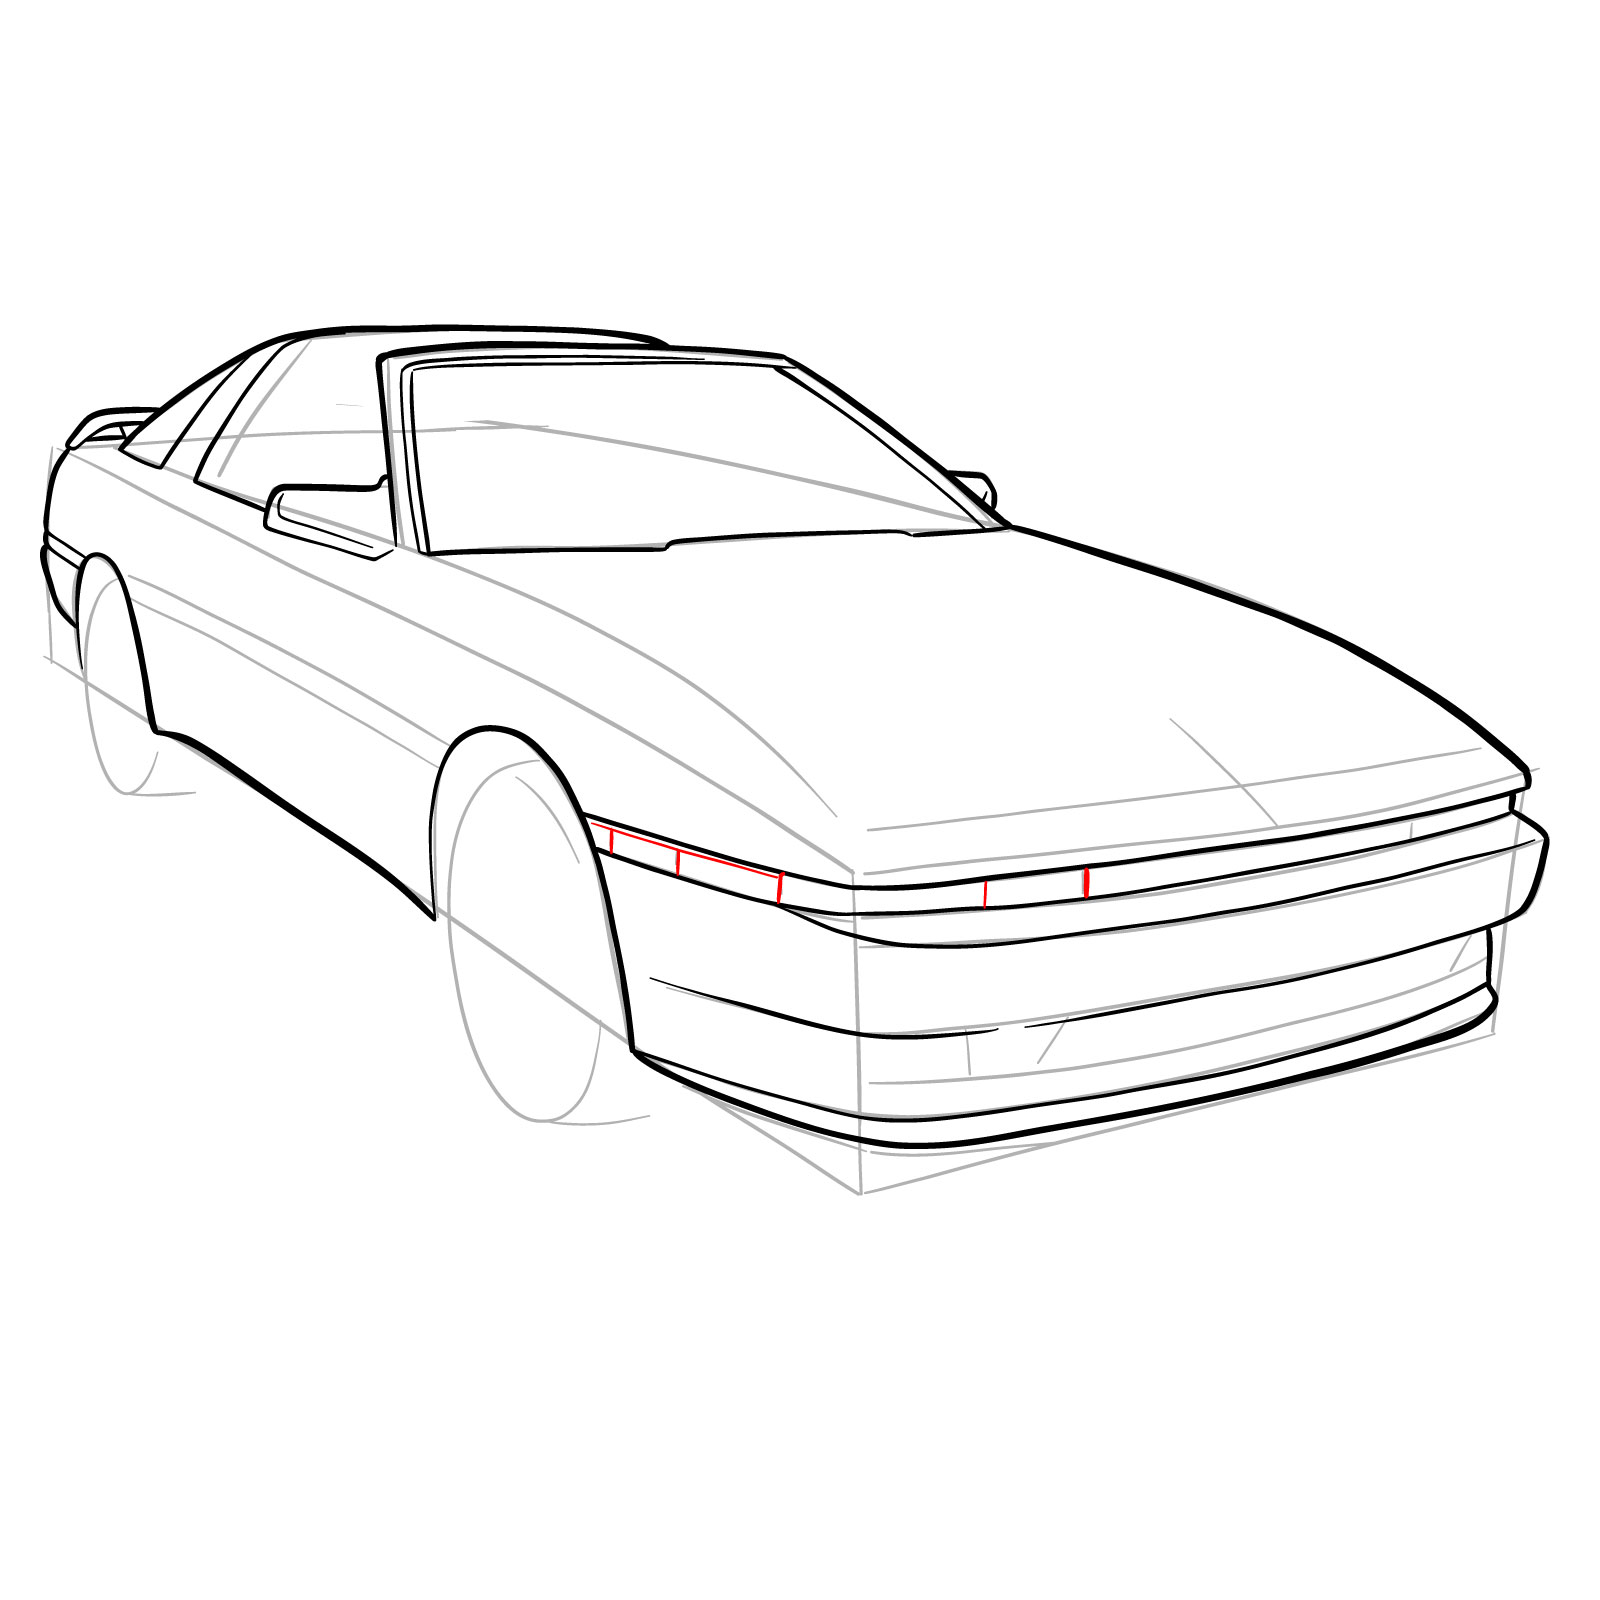 How to draw a 1988 Toyota Supra Turbo MK 3 - step 17